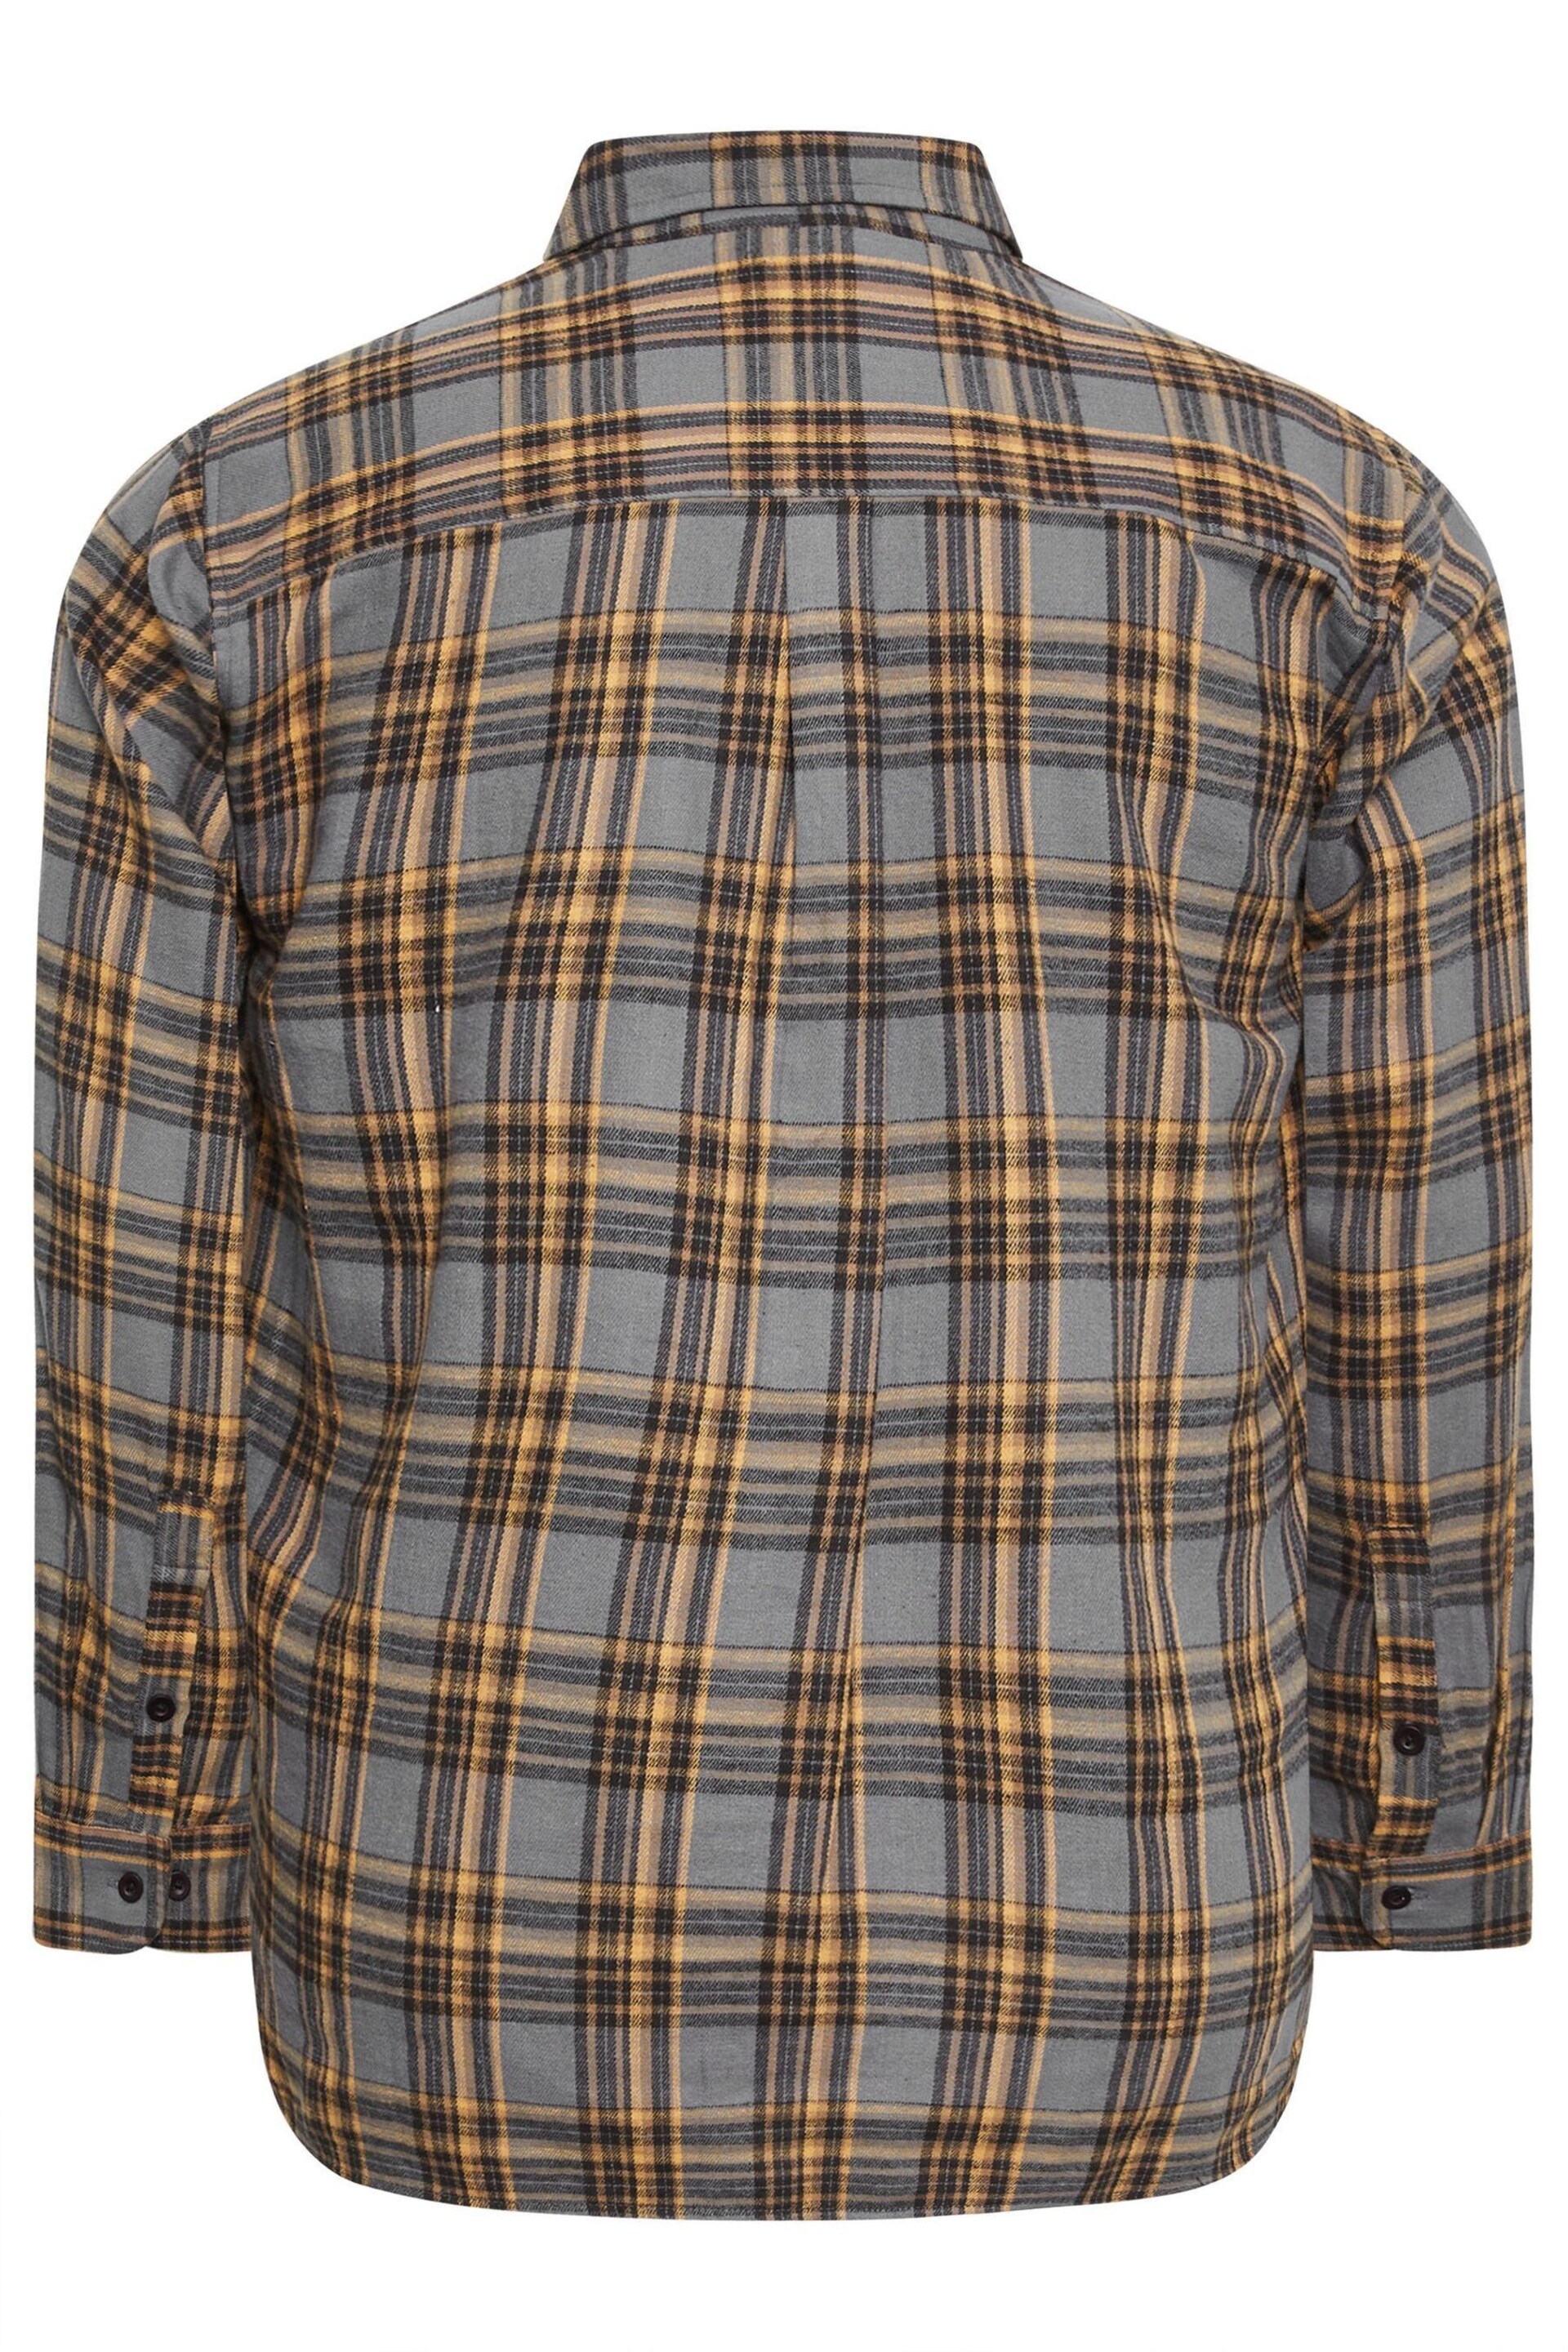 BadRhino Big & Tall Grey Brushed Check Shirt - Image 4 of 4